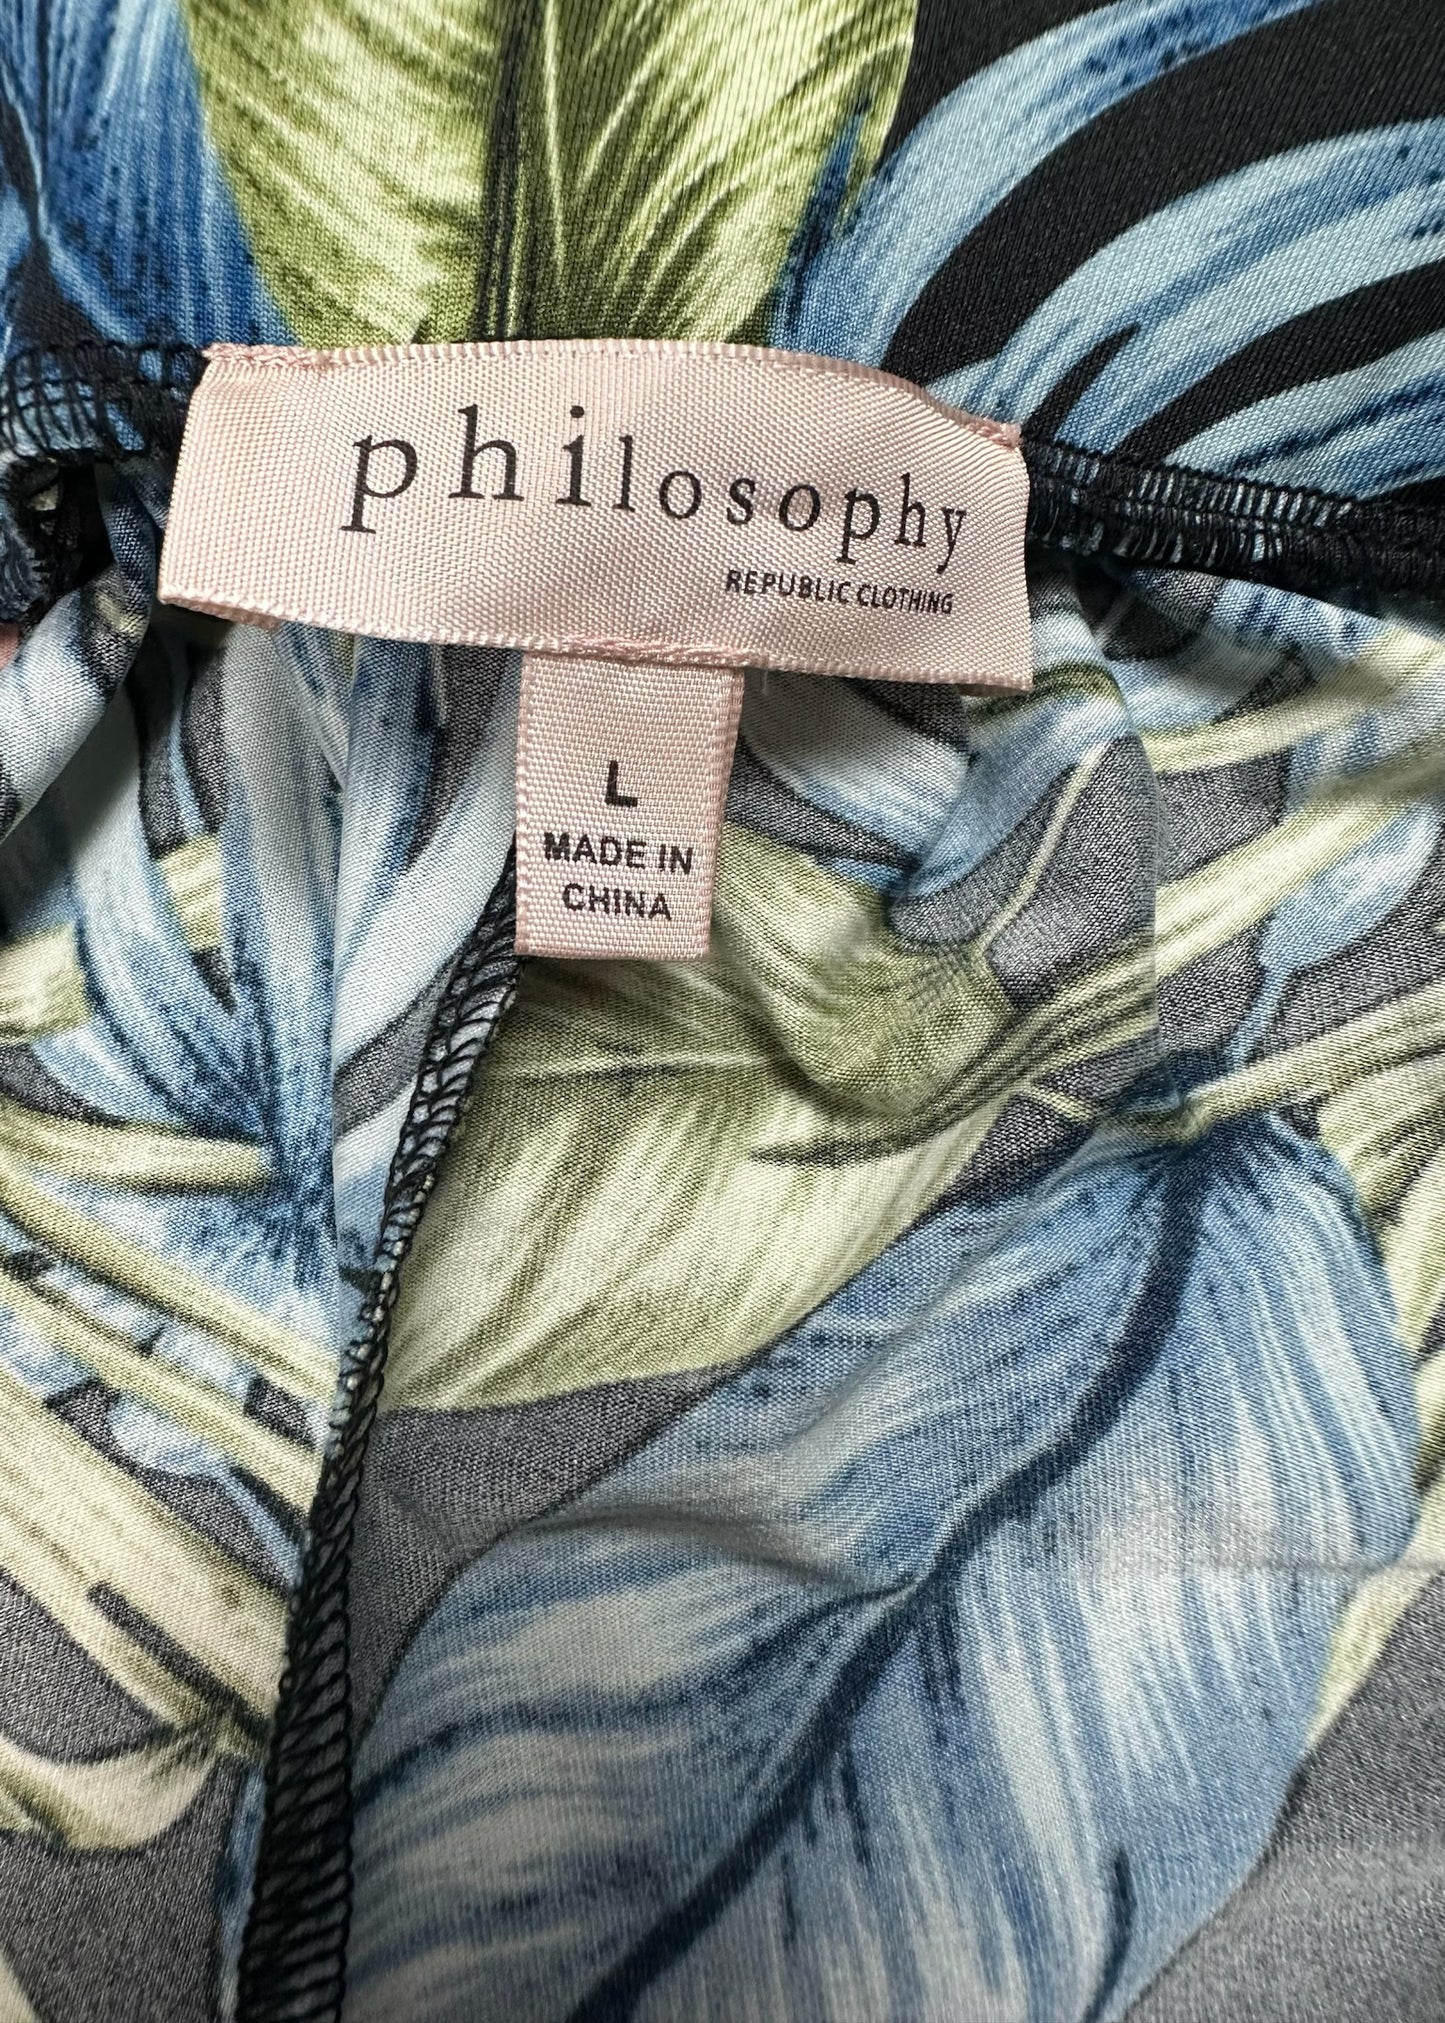 Flare Leg Pants by Philosophy Republic Clothing